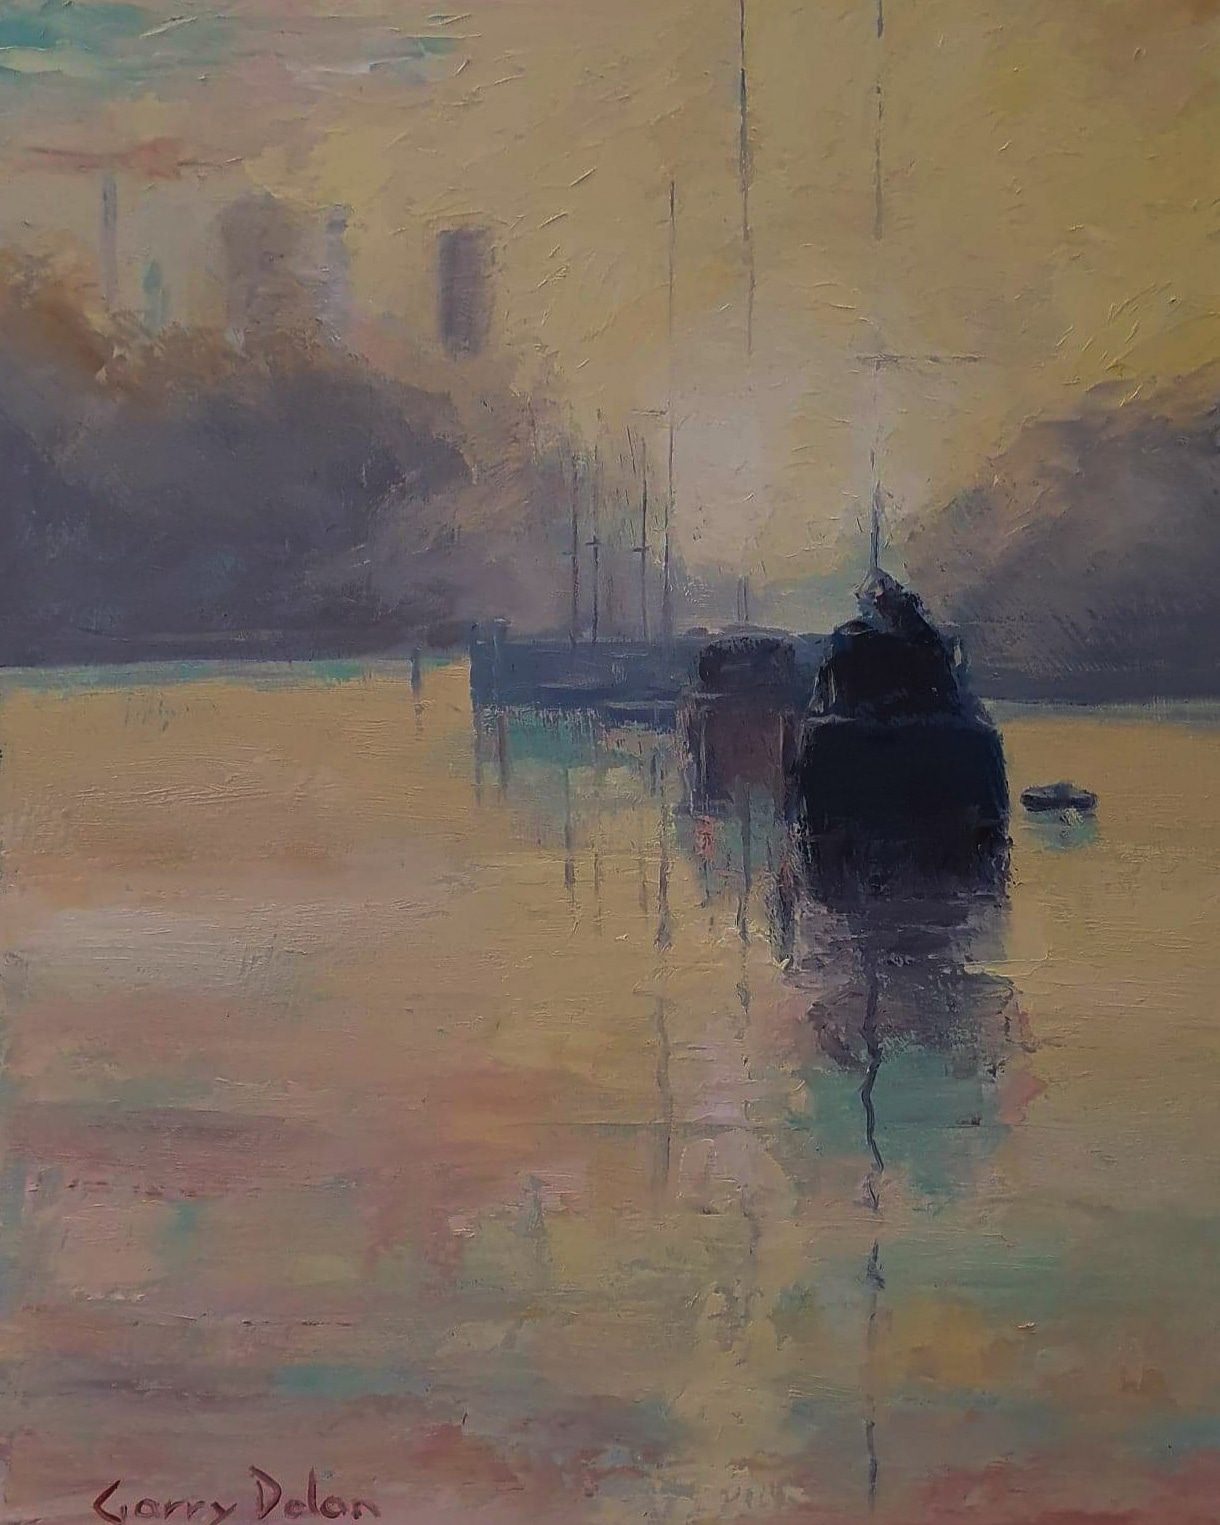 Sunset on the Brisbane River by Garry Dolan | Lethbridge 20000 2021 Finalists | Lethbridge Gallery